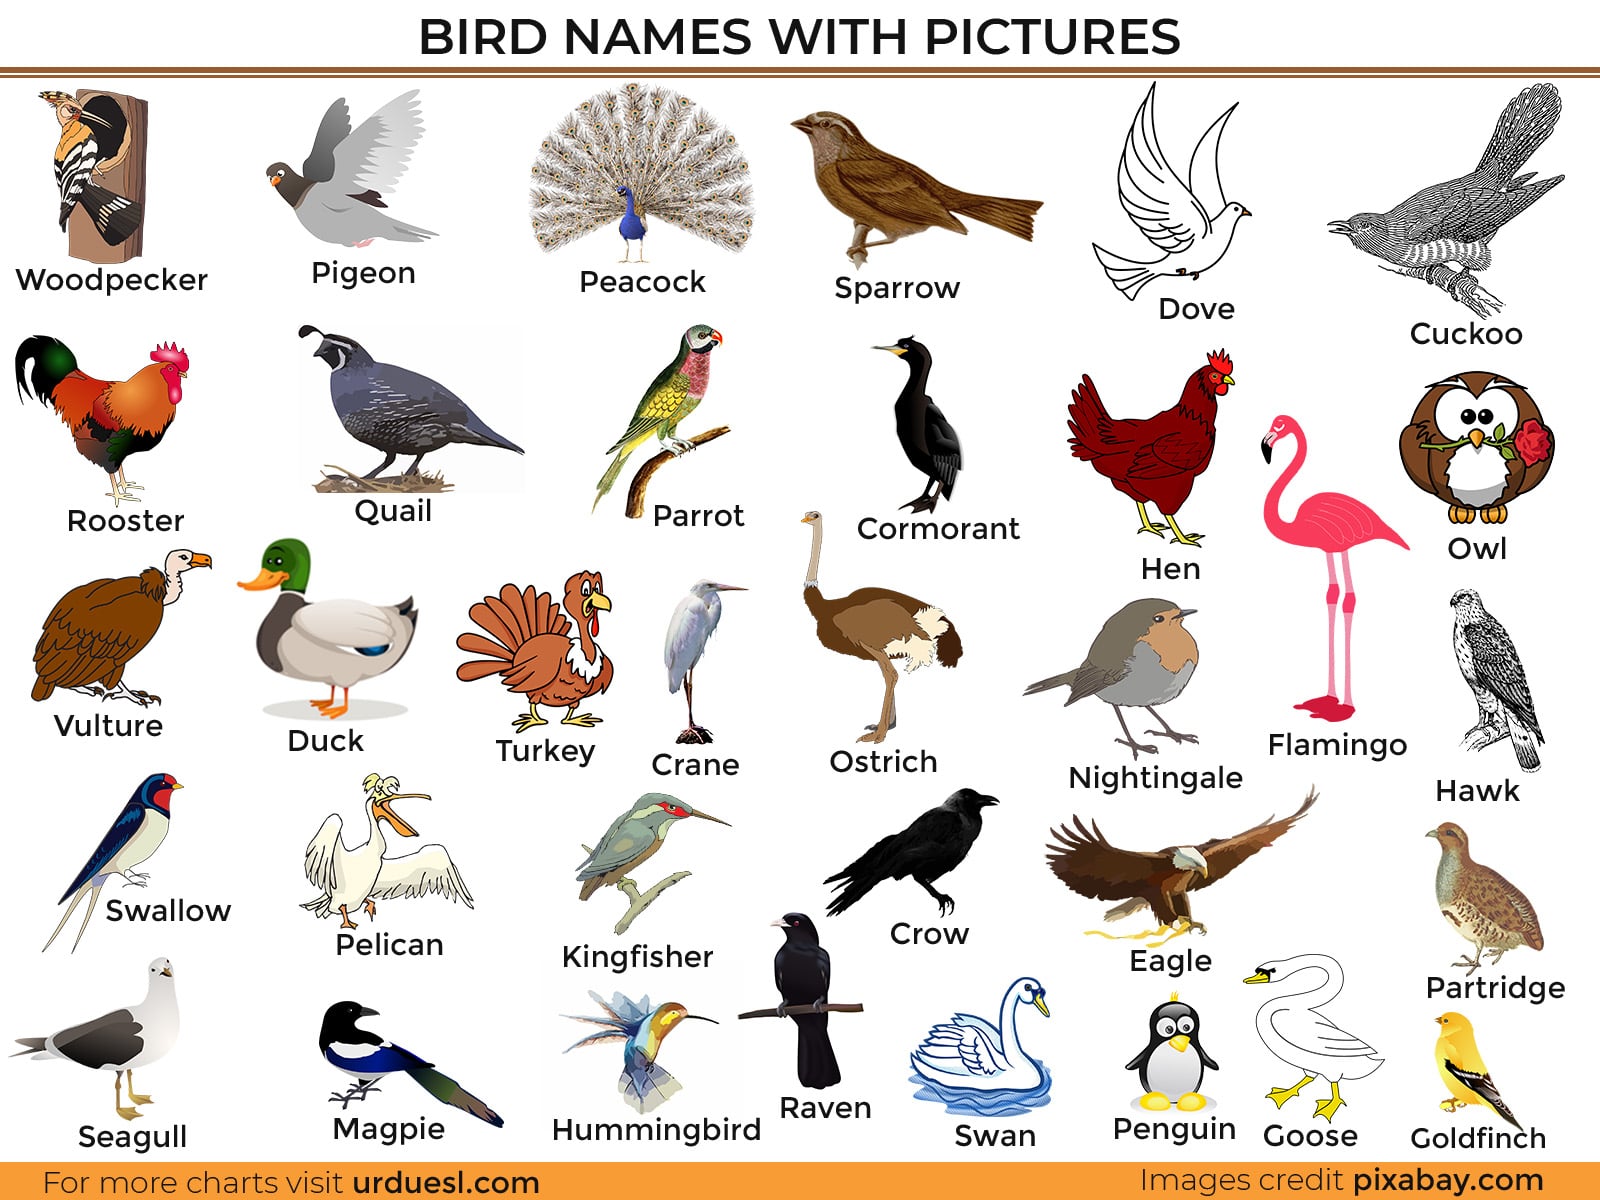 Bird flightless name a Text or